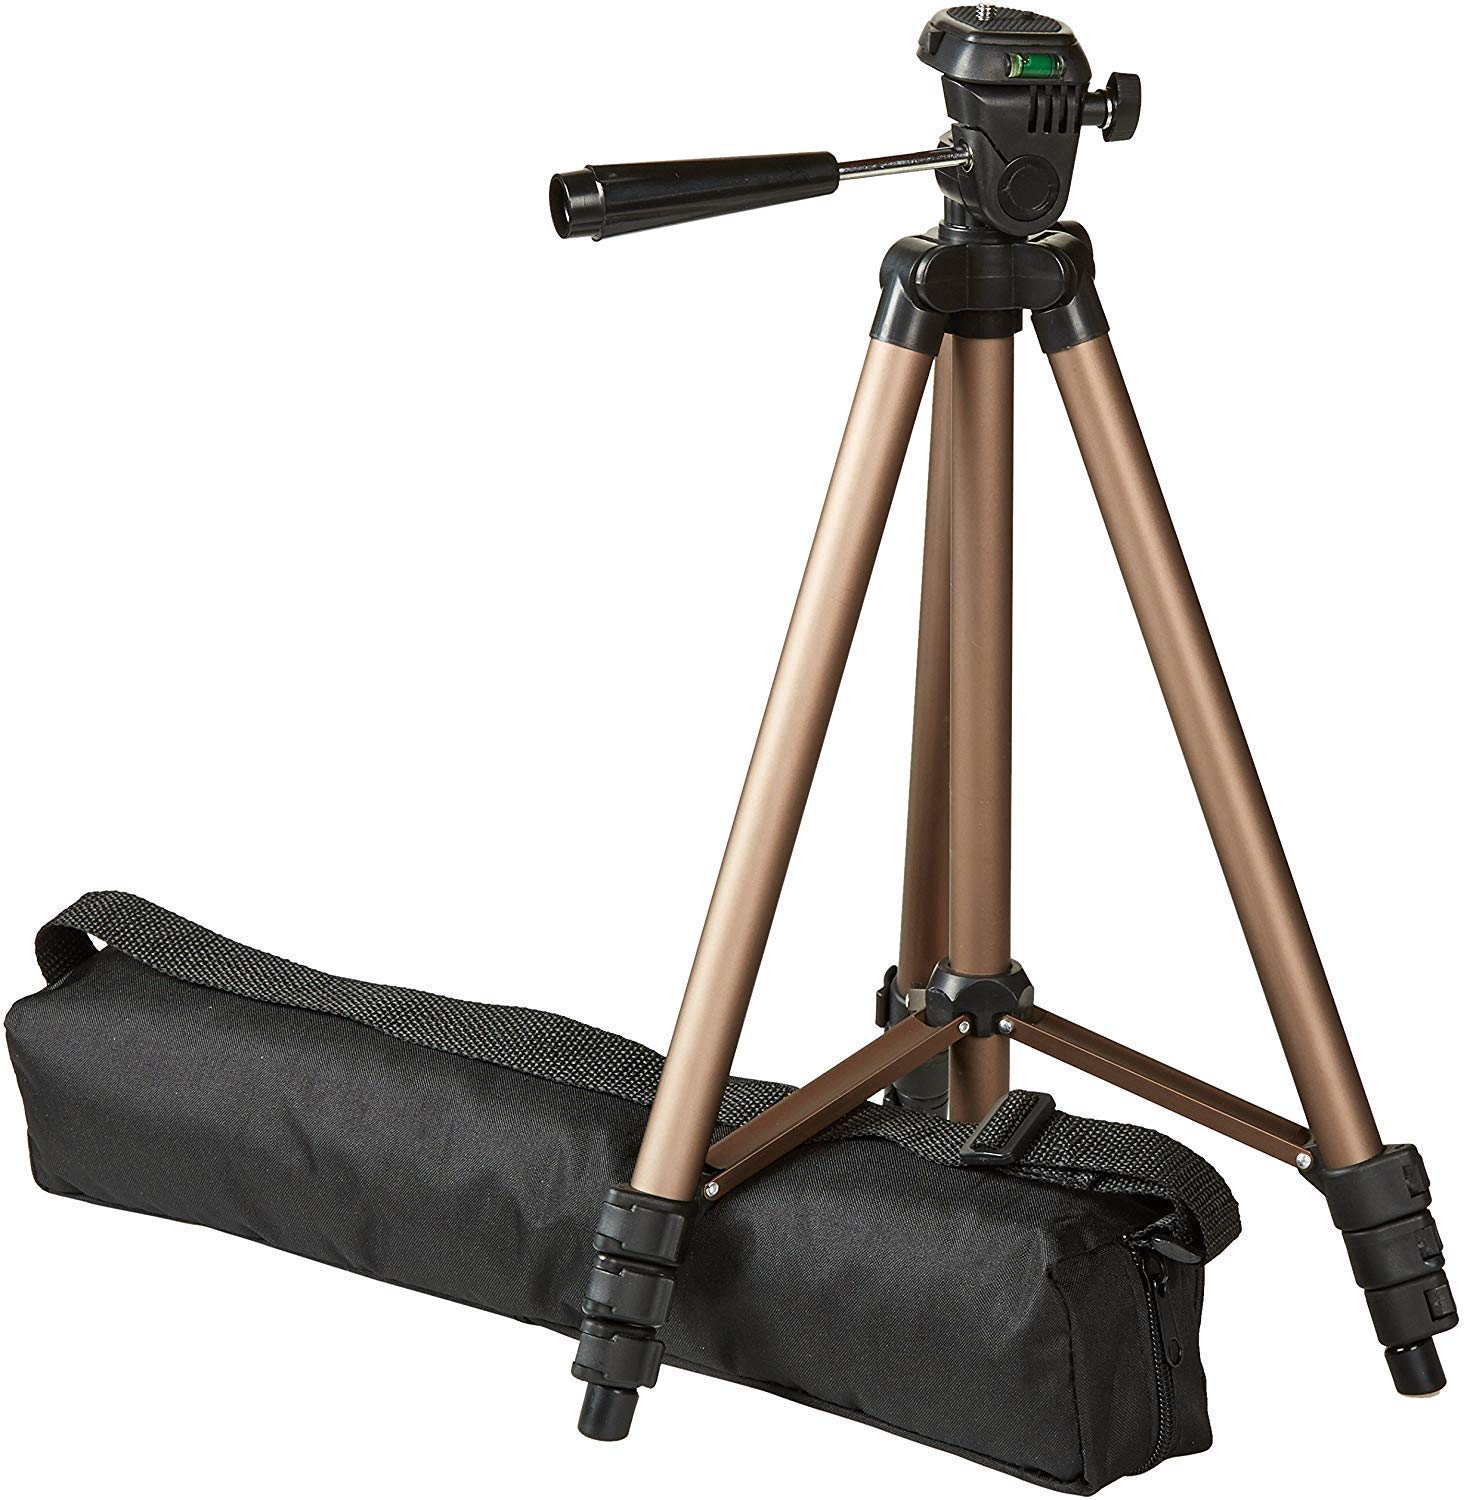 Basics 50-inch Lightweight Camera Mount Tripod Stand With